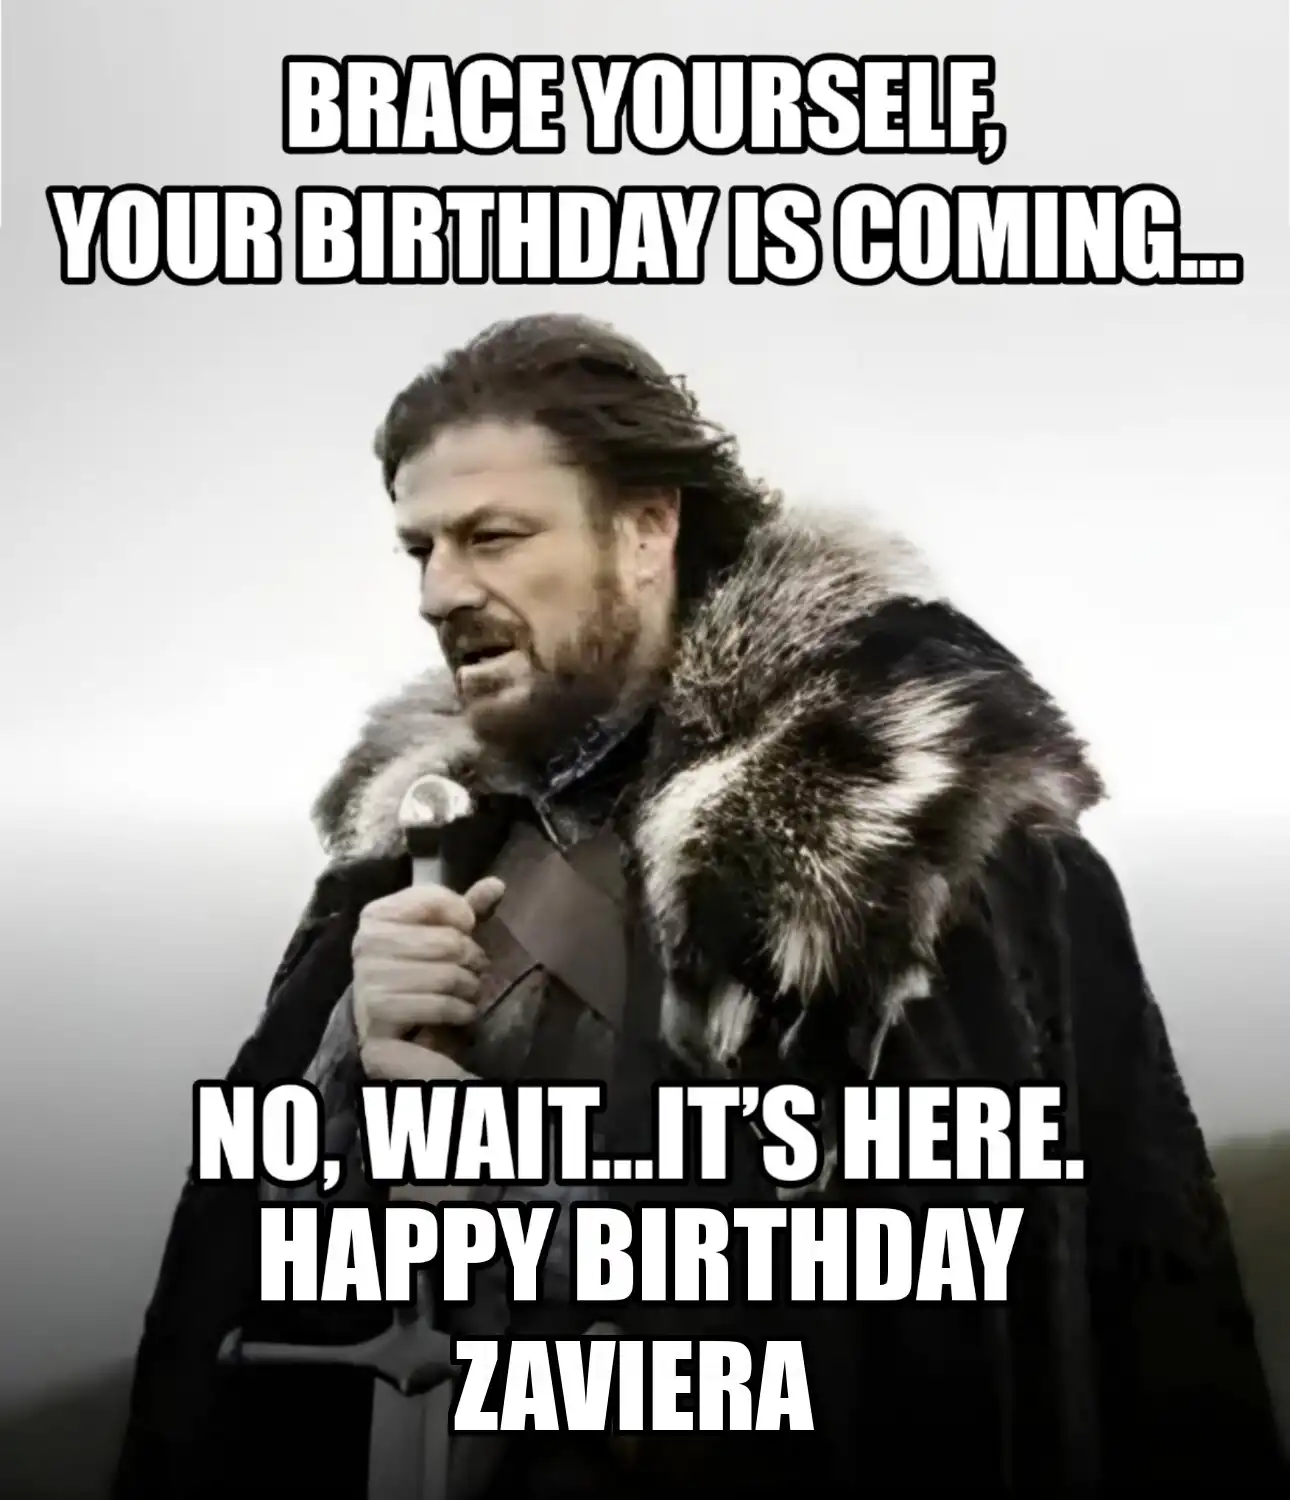 Happy Birthday Zaviera Brace Yourself Your Birthday Is Coming Meme